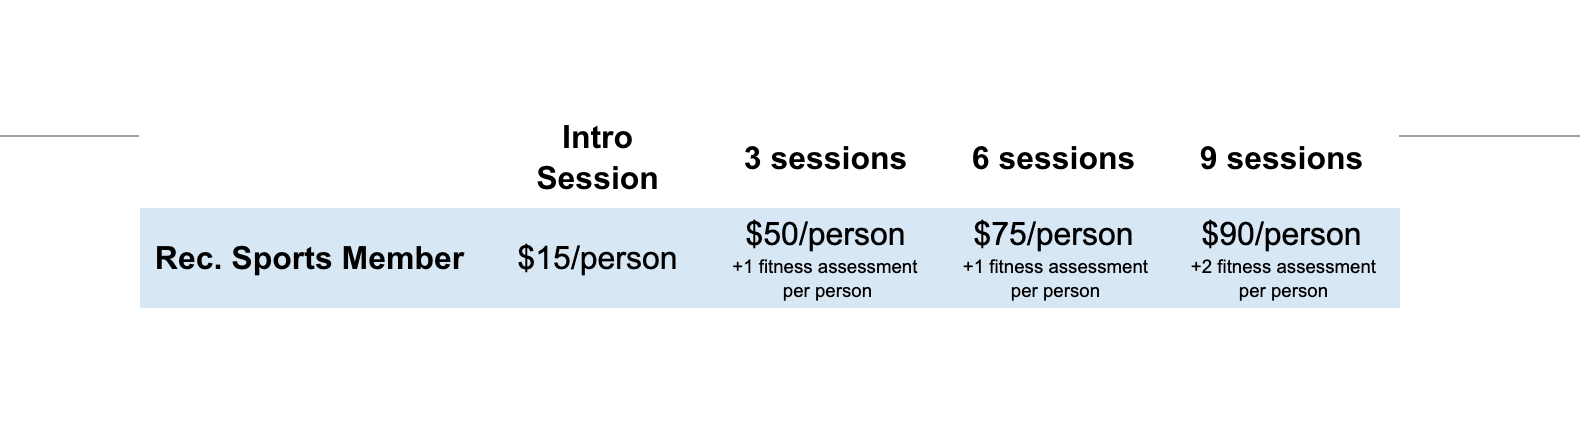 Rec sports member pricing: Intro Session: $15/per person, 3 sessions: $50 per person + 1 fitness assessment per person, 6 sessions, $75 per person + 1 fitness assessment per person, 9 sessions: $90 per person +2 fitness assessments per person